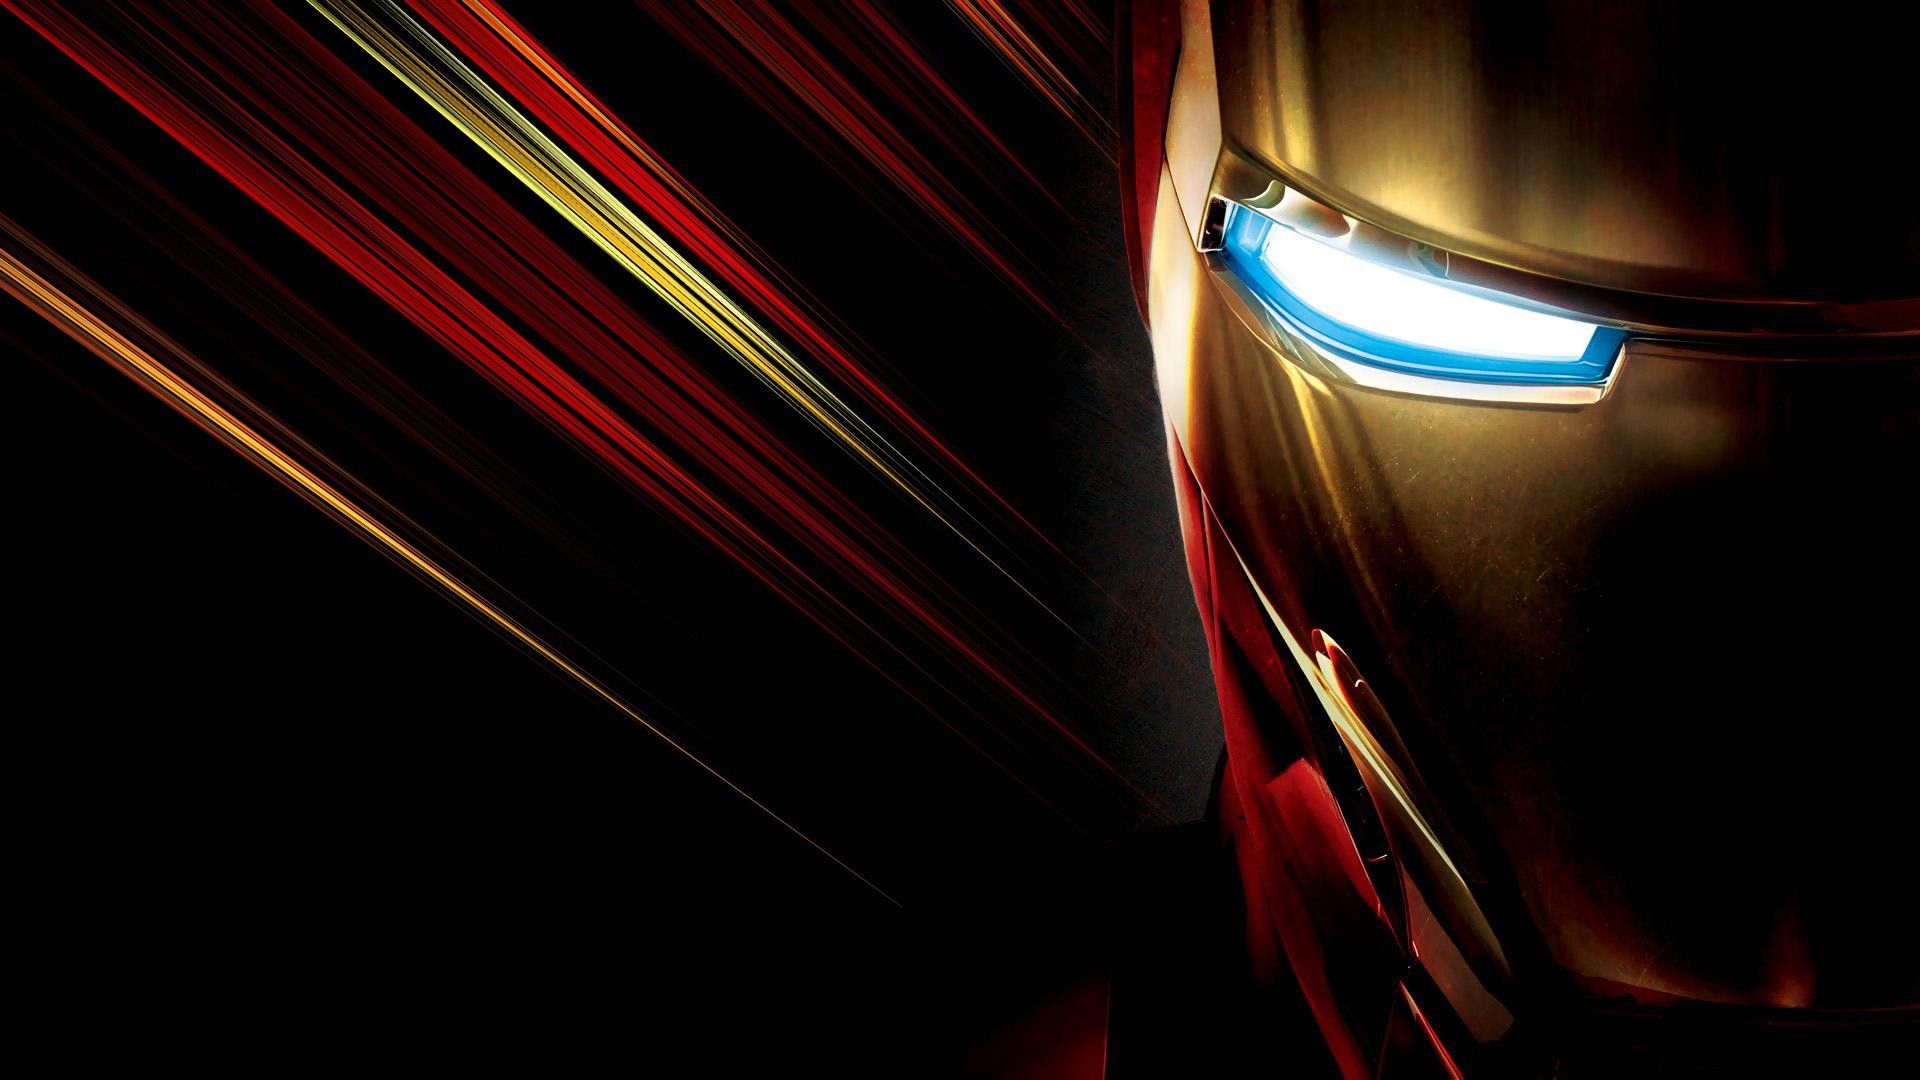 Free download Iron Man Computer Wallpaper Desktop Background